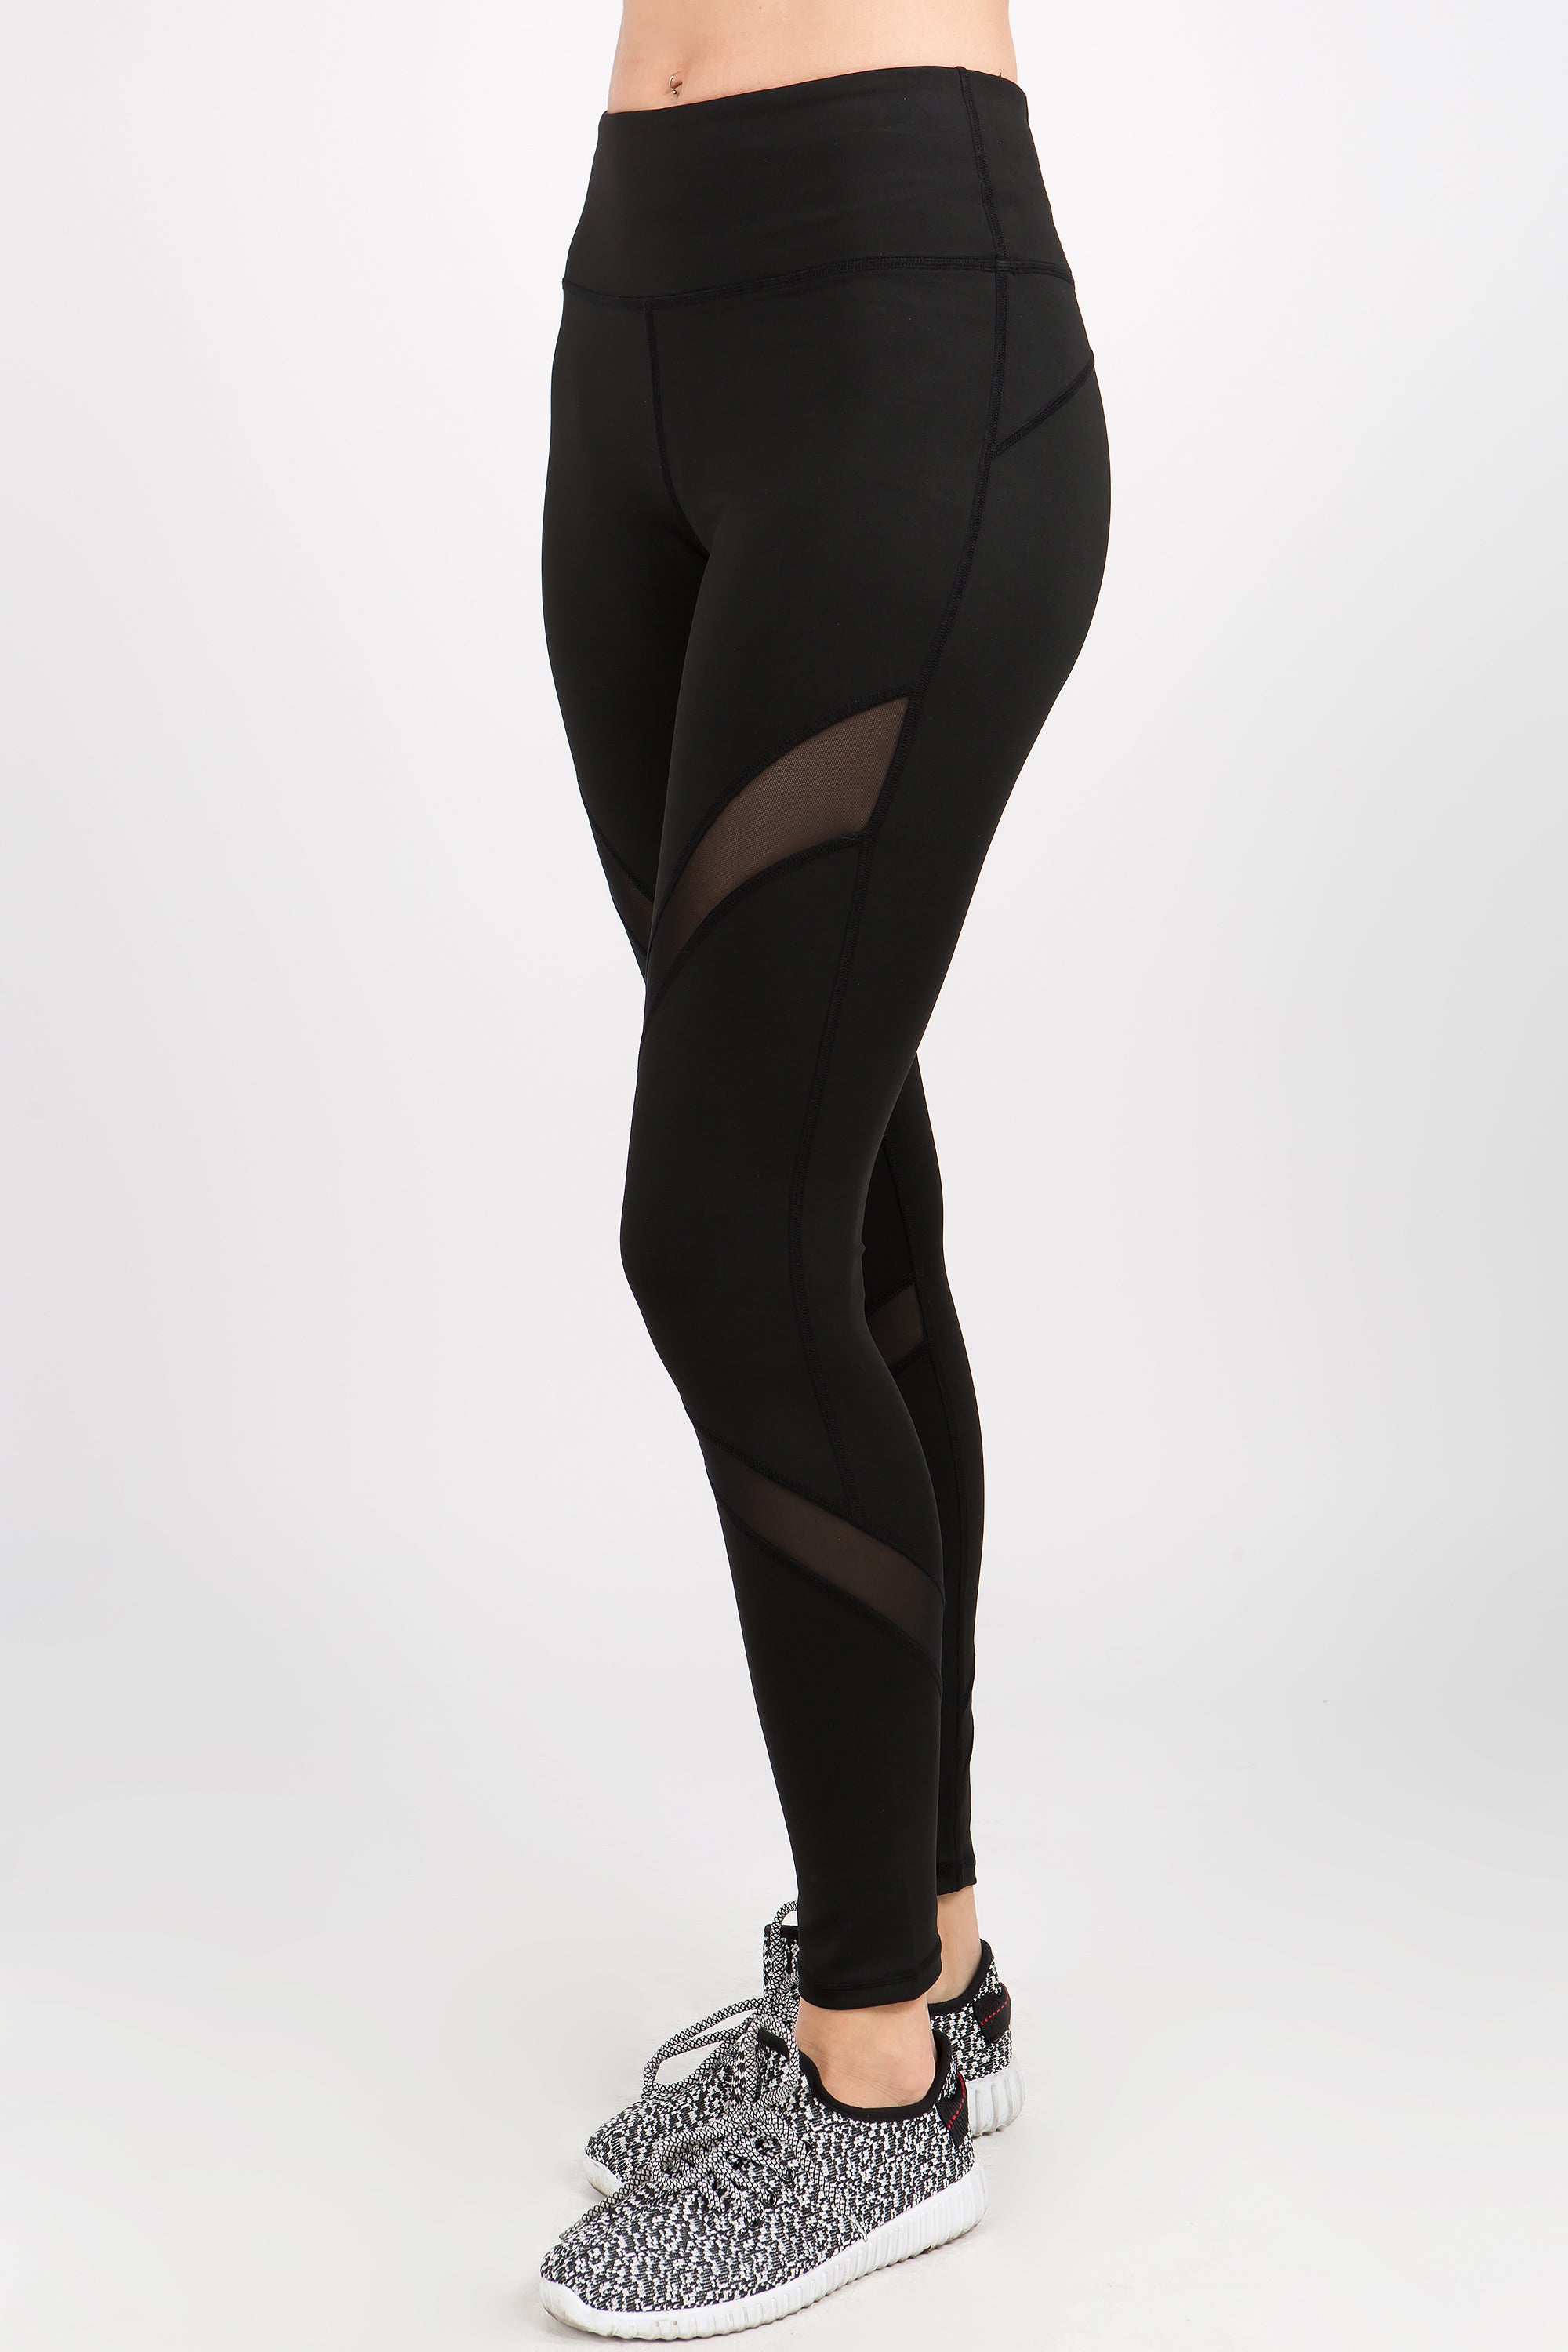 Wjskv Mesh Energy Tights Solid Pocket Elastic Yoga Pants Women Running  Training Black Gym Legging Fitness Female Sports Leggings,black, Xl